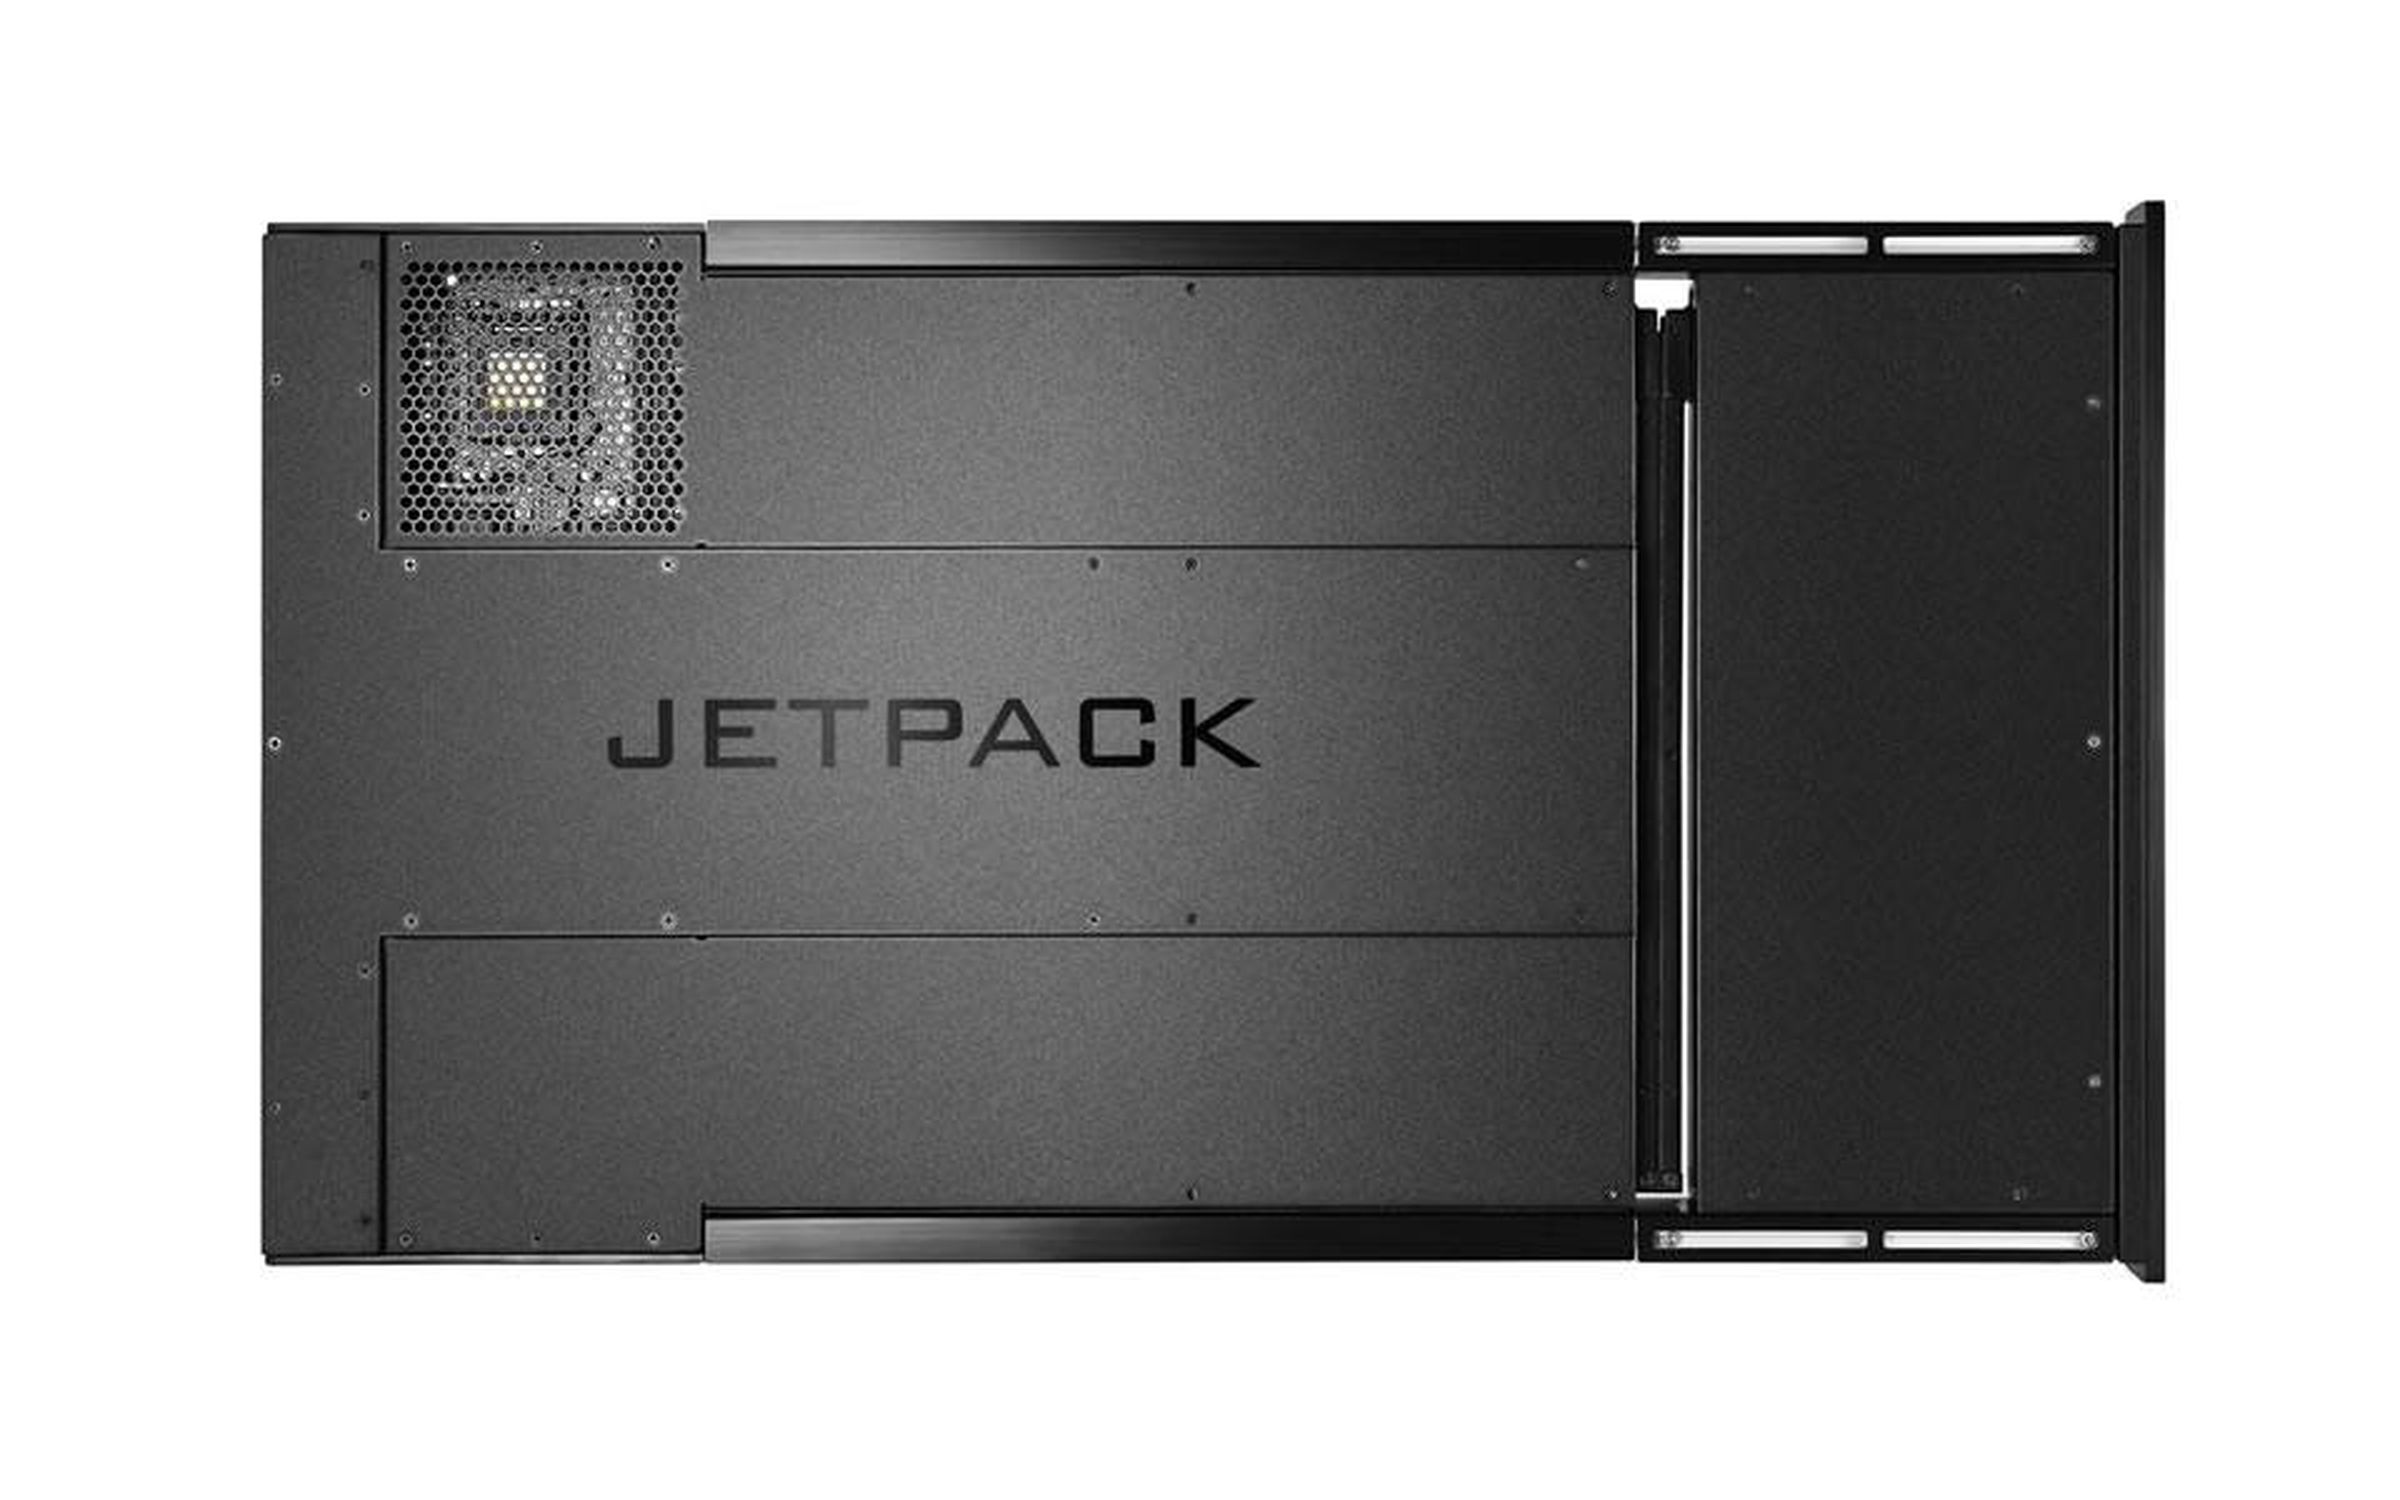 Piixl's Jetpack SteamOS PC